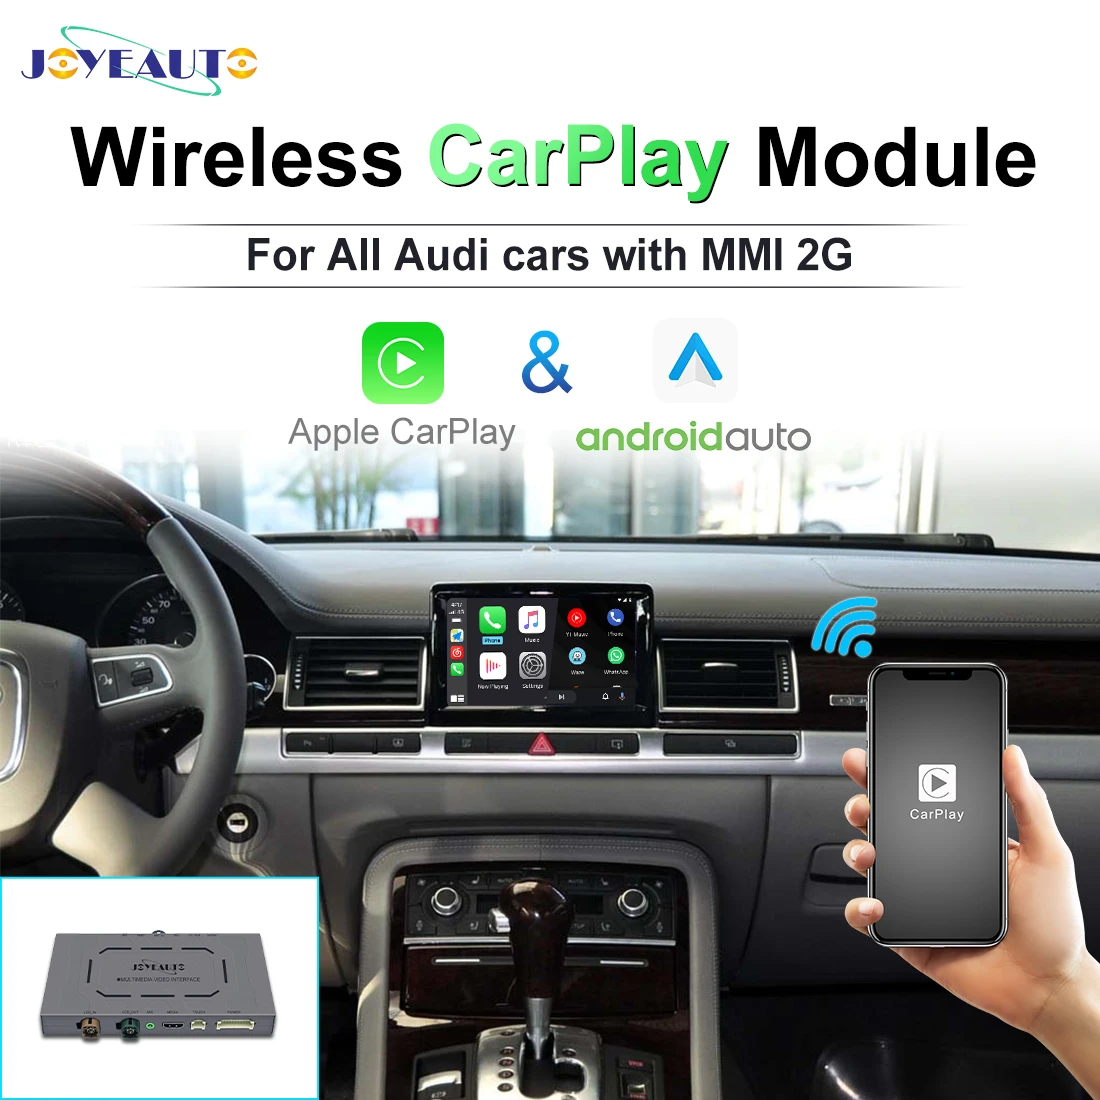 

Joyeauto Wireless Apple Carplay For Audi MMI 2G A4 A5 A6 2006-2009 Android Auto Carplay Module Decoder Box Netflix Speaker Radio